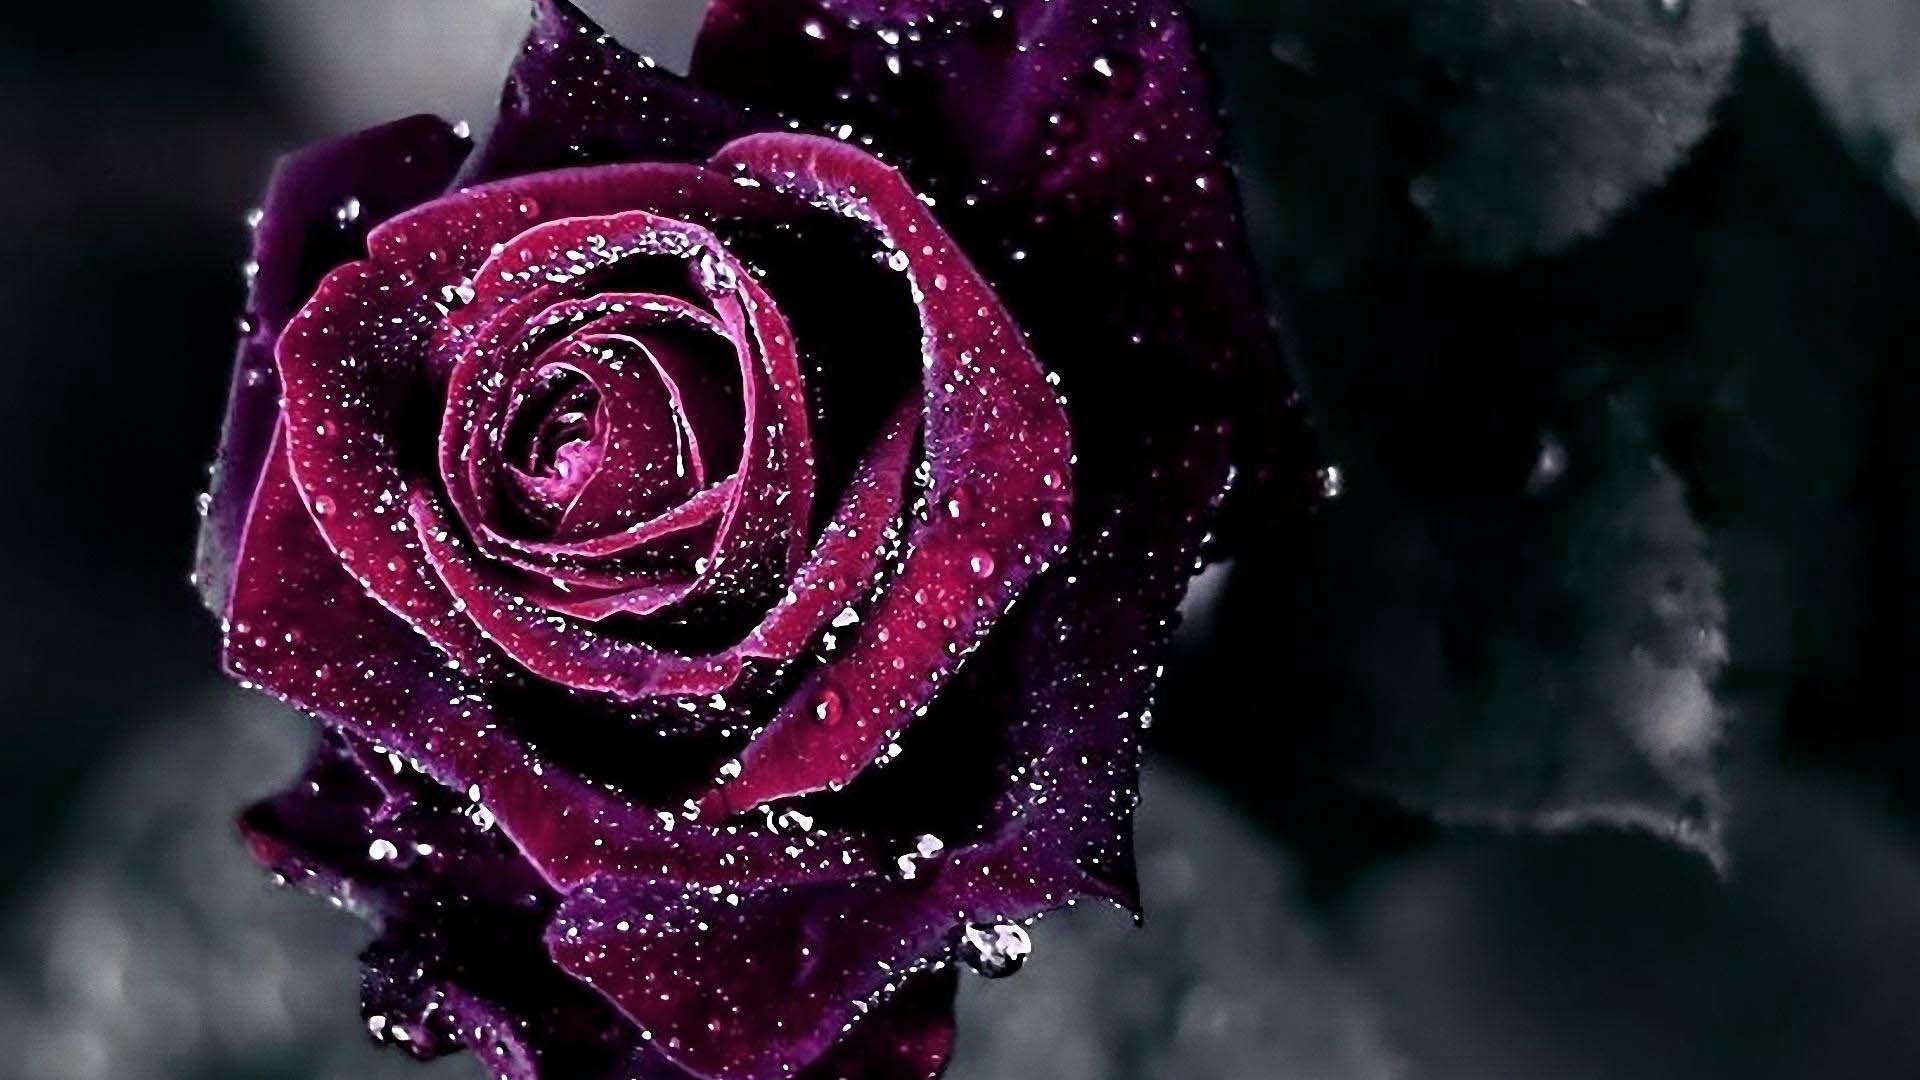 1920x1080 Erde/Natur - Rose Purple Flower Erde/Natur Blume Wassertropfen Close-Up  Wallpaper